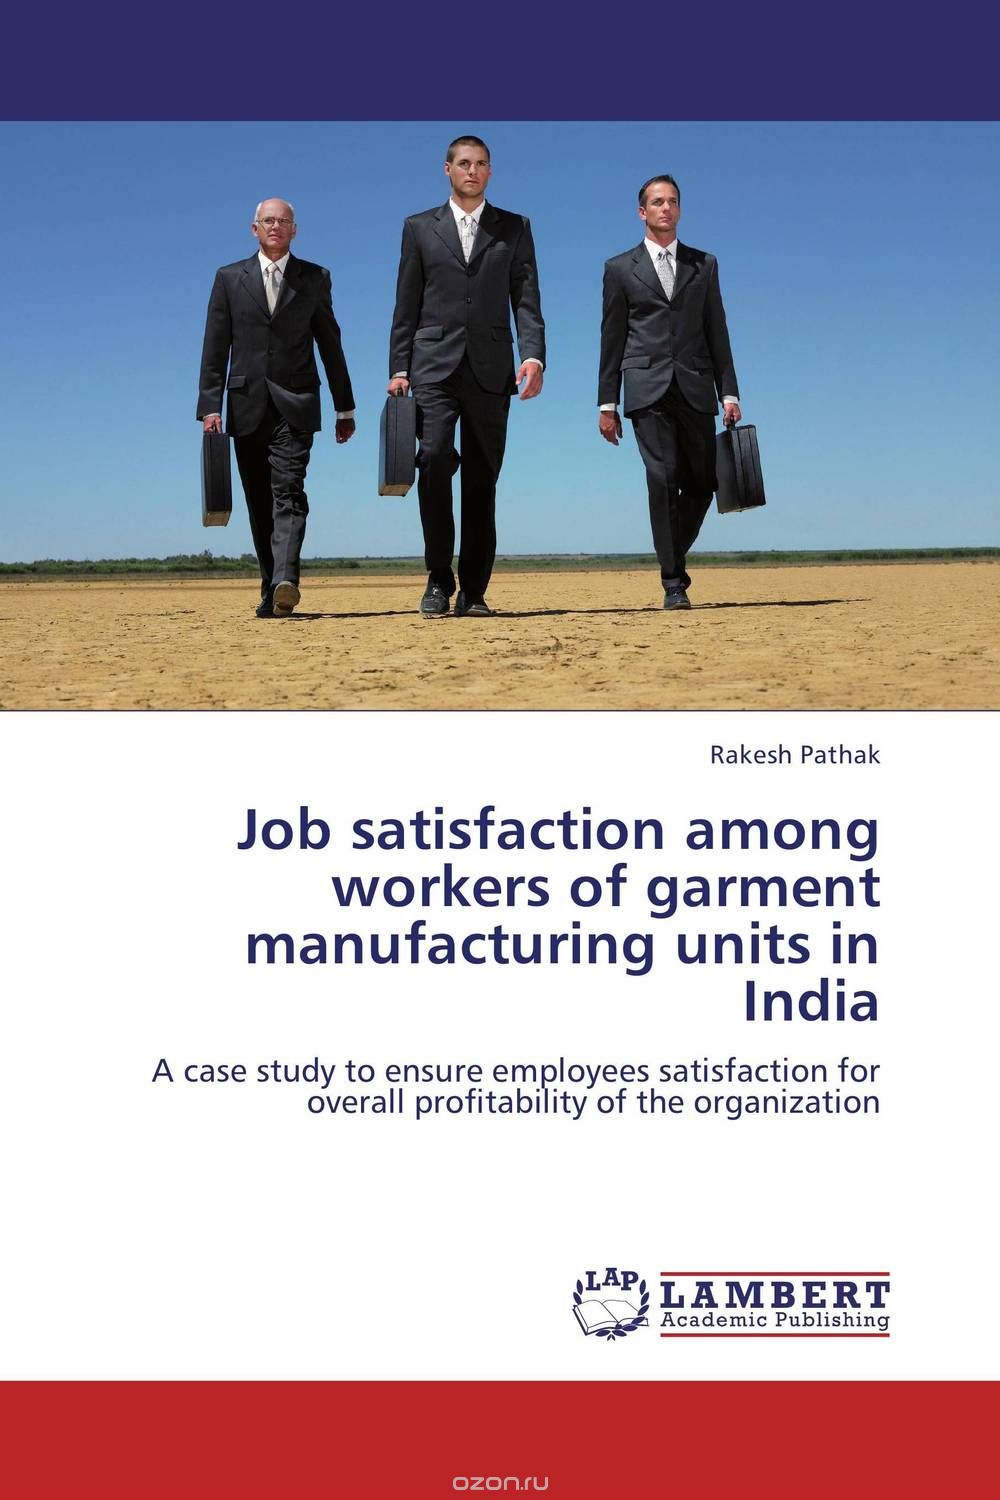 Скачать книгу "Job satisfaction among workers of garment manufacturing units in India"